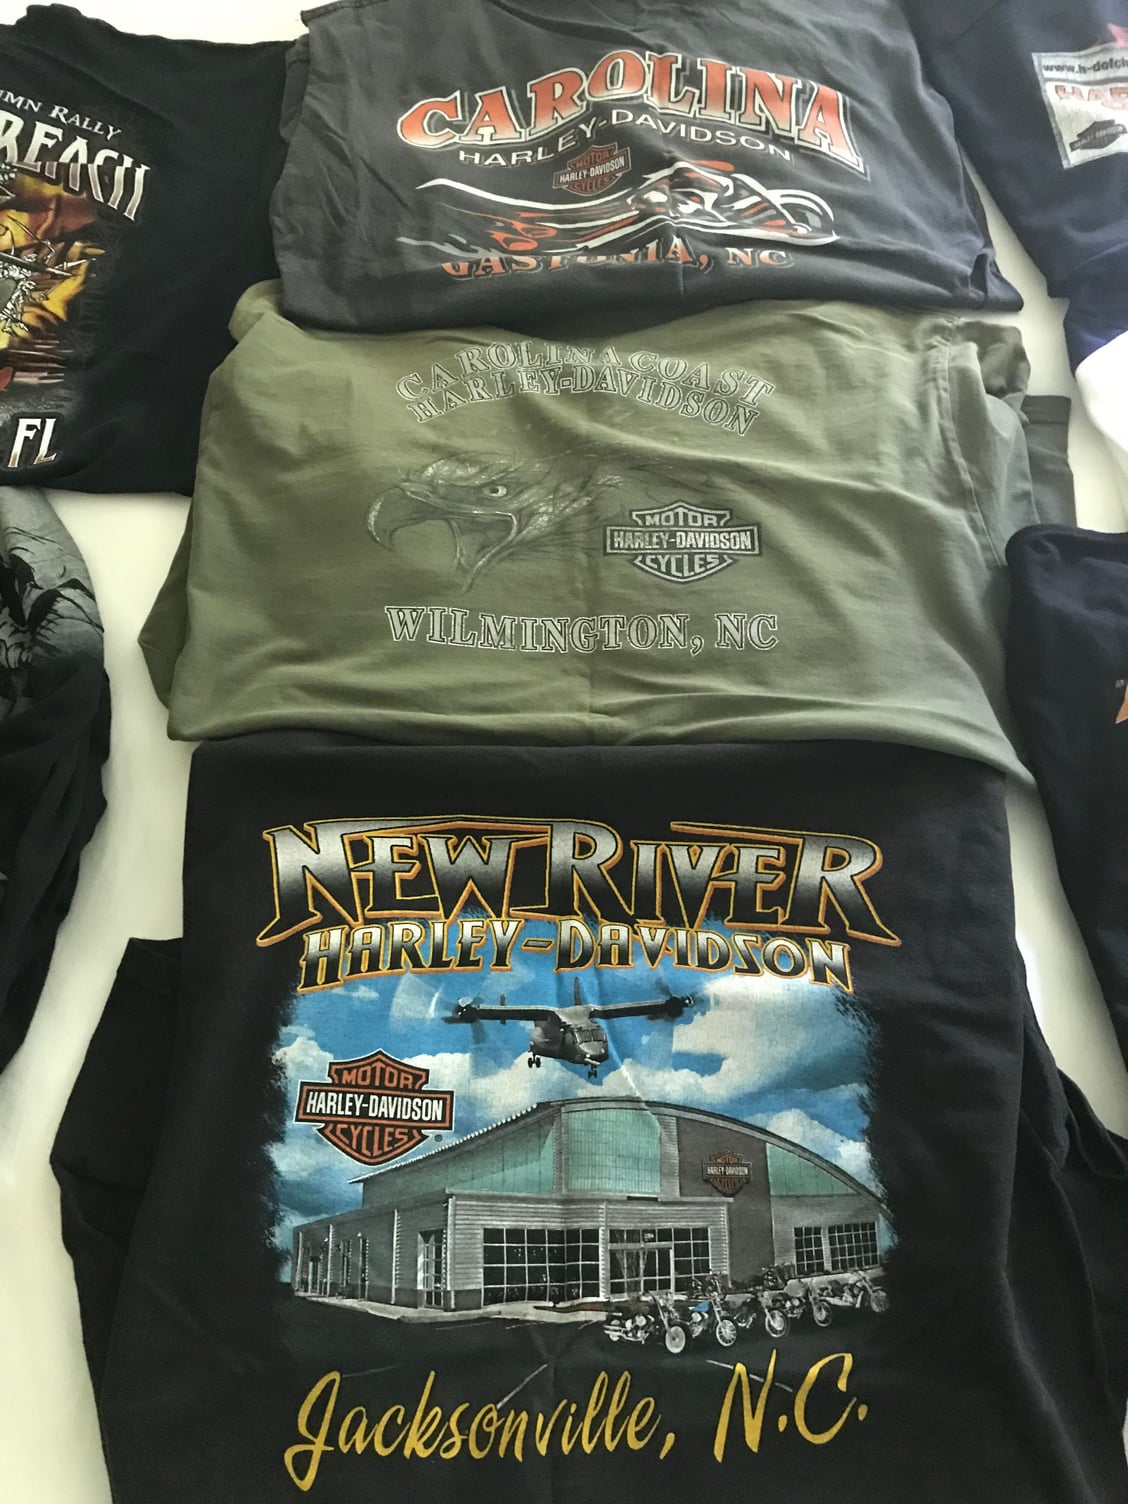 HD Dealer T Shirts - XL - Harley Davidson Forums